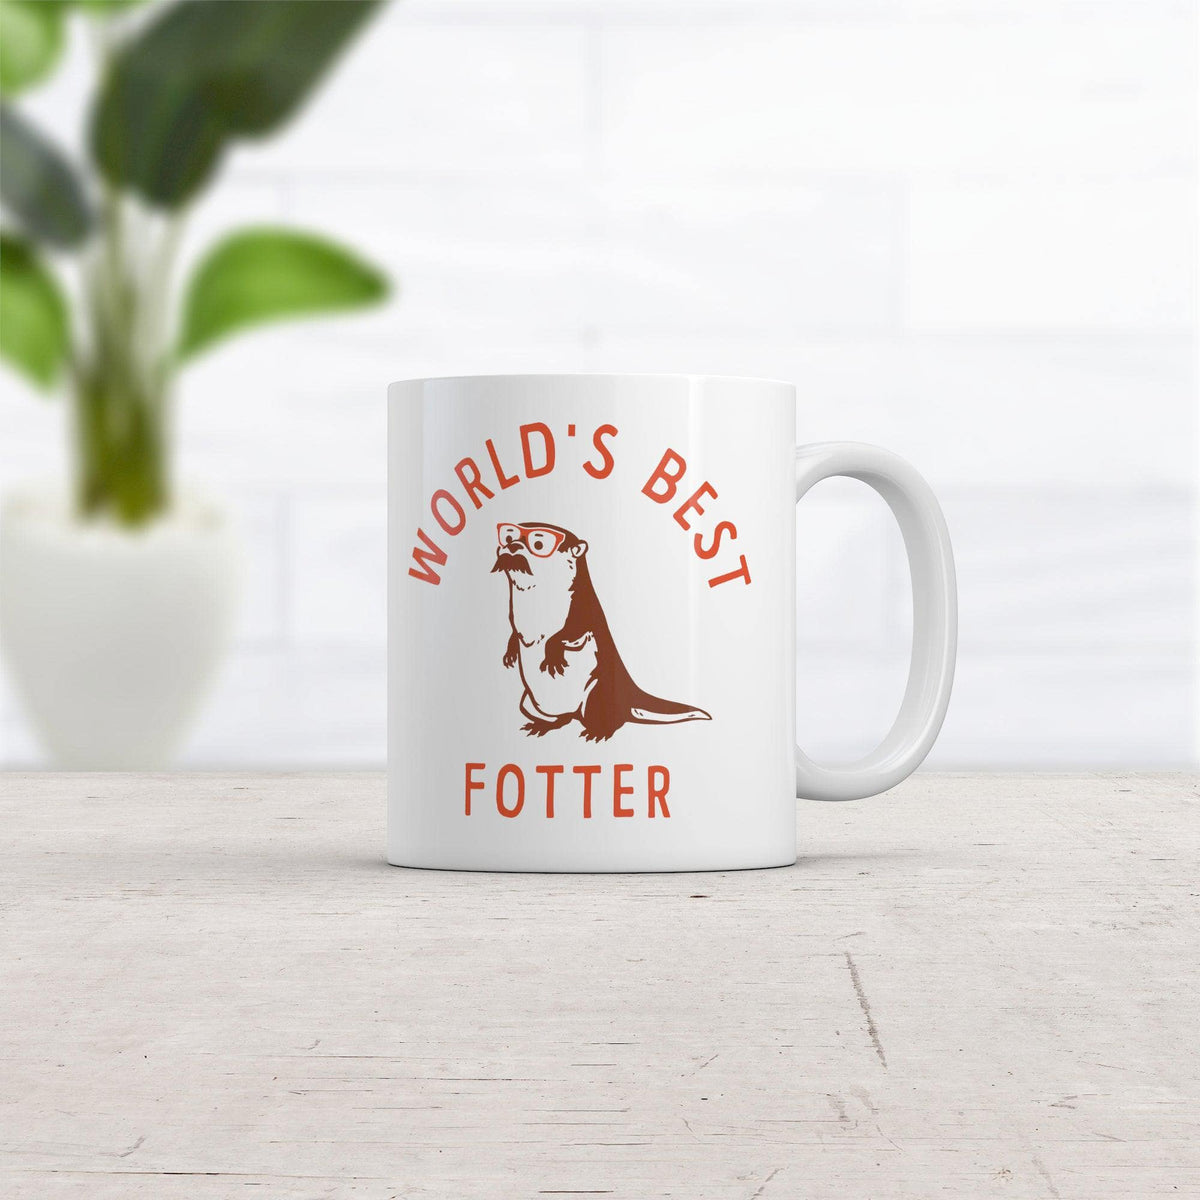 Worlds Best Fotter Mug Funny Sarcastic Fathers Day Joke Otter Graphic Novelty Cup-11oz  -  Crazy Dog T-Shirts